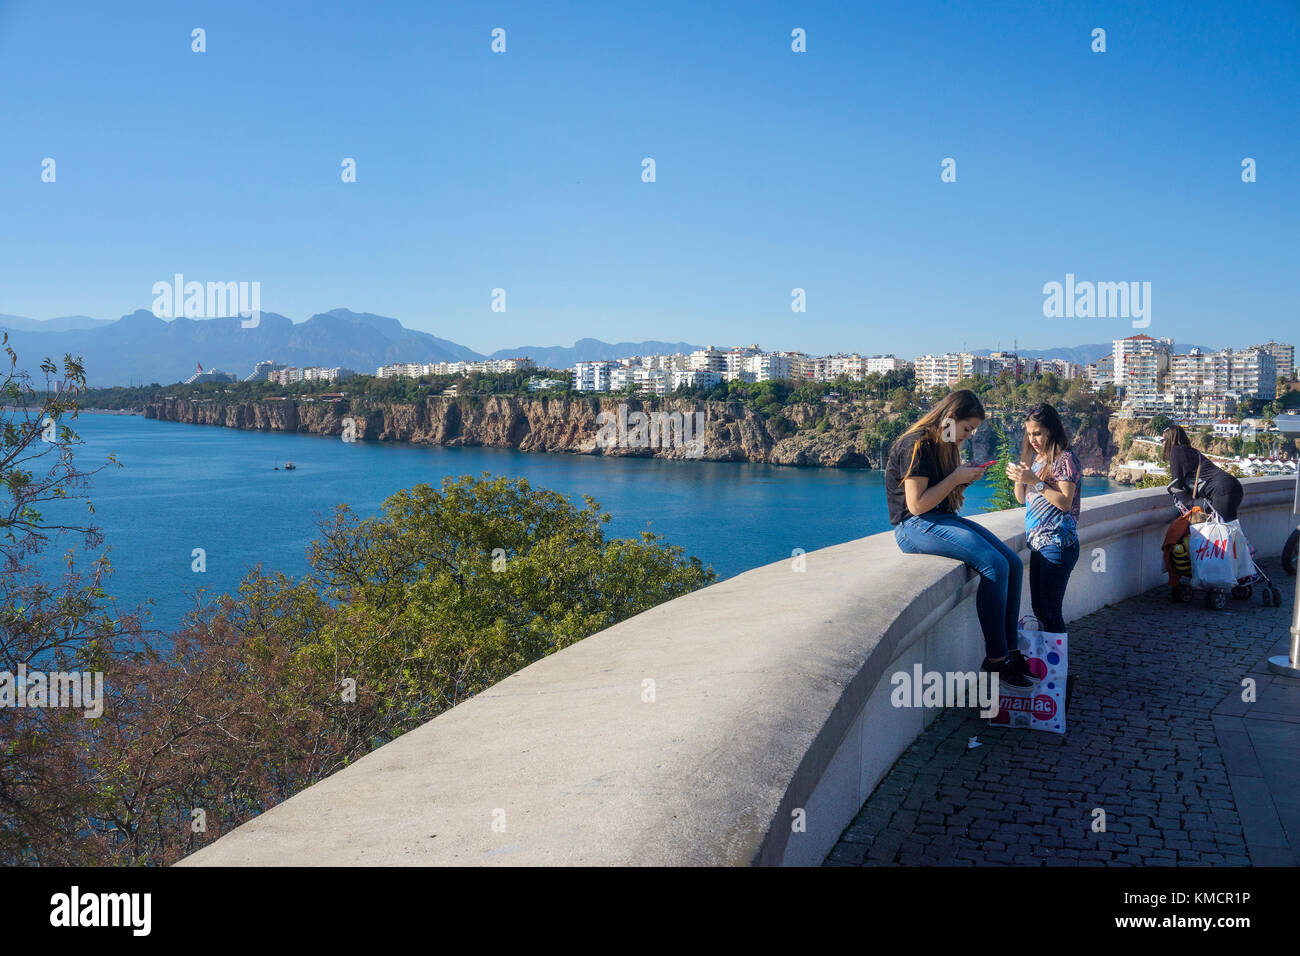 Young girls with smartphone at the promenade, Karaalioglu Park, old town Kaleici, Antalya, turkish riviera, Turkey Stock Photo